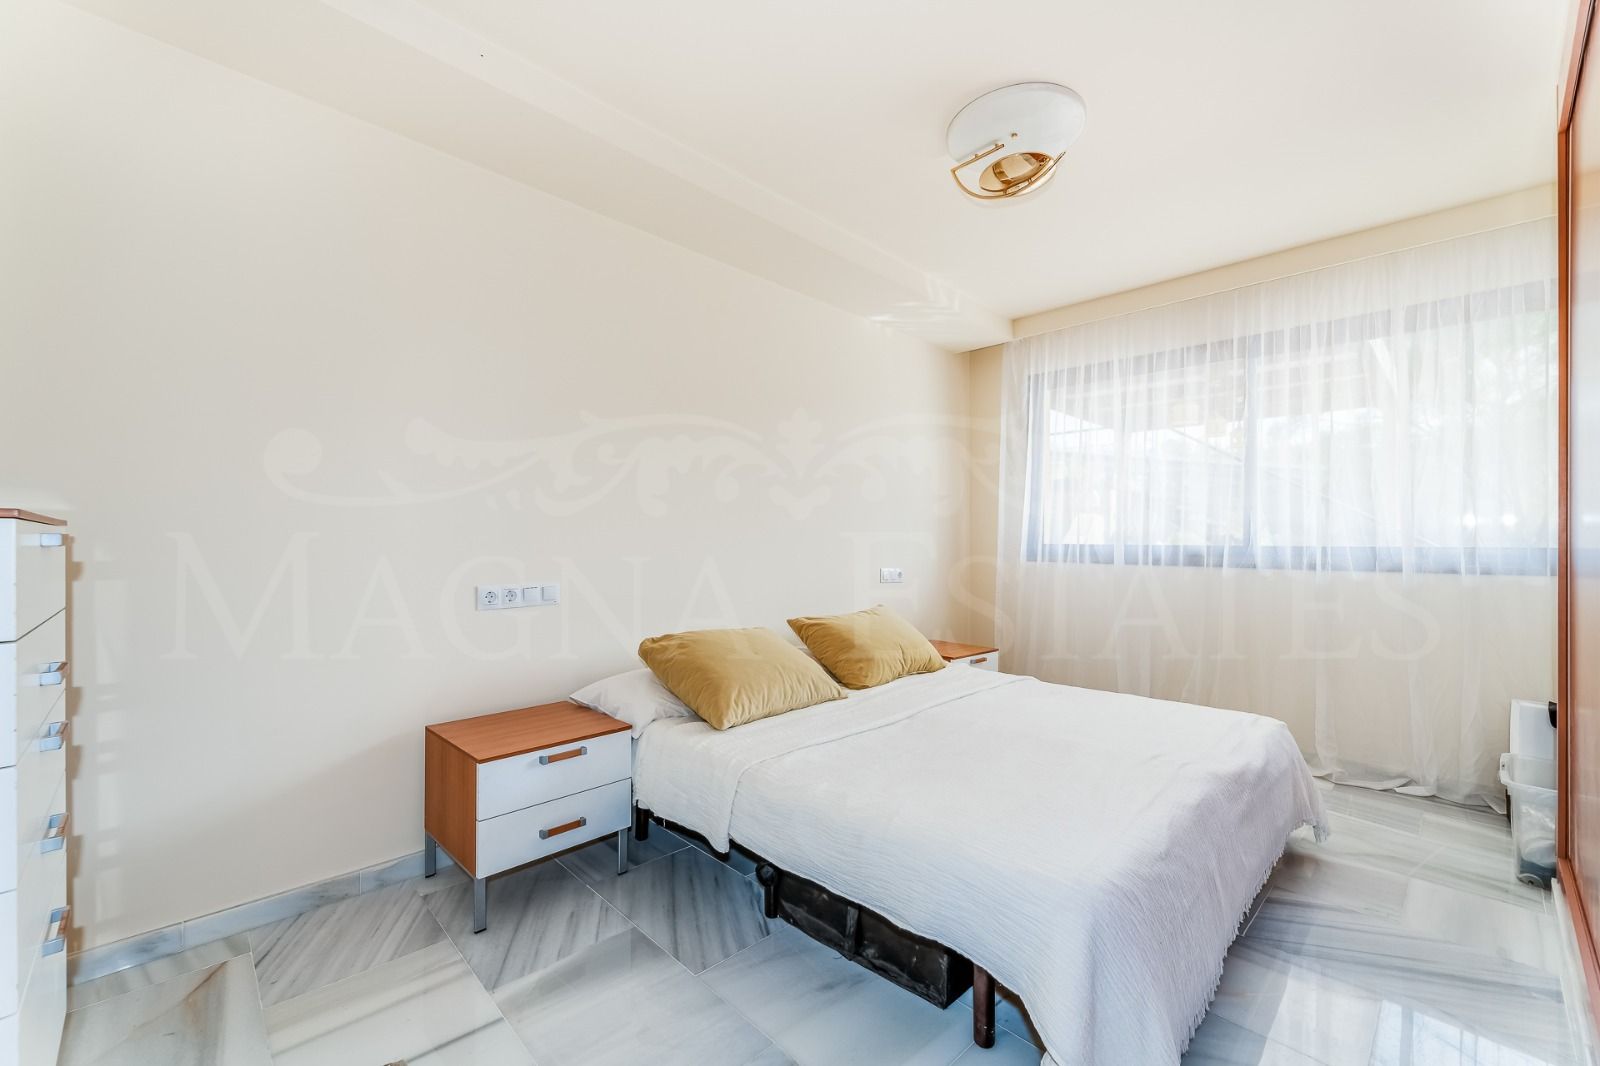 Recently renovated 4 bedroom villa in Benahavís.